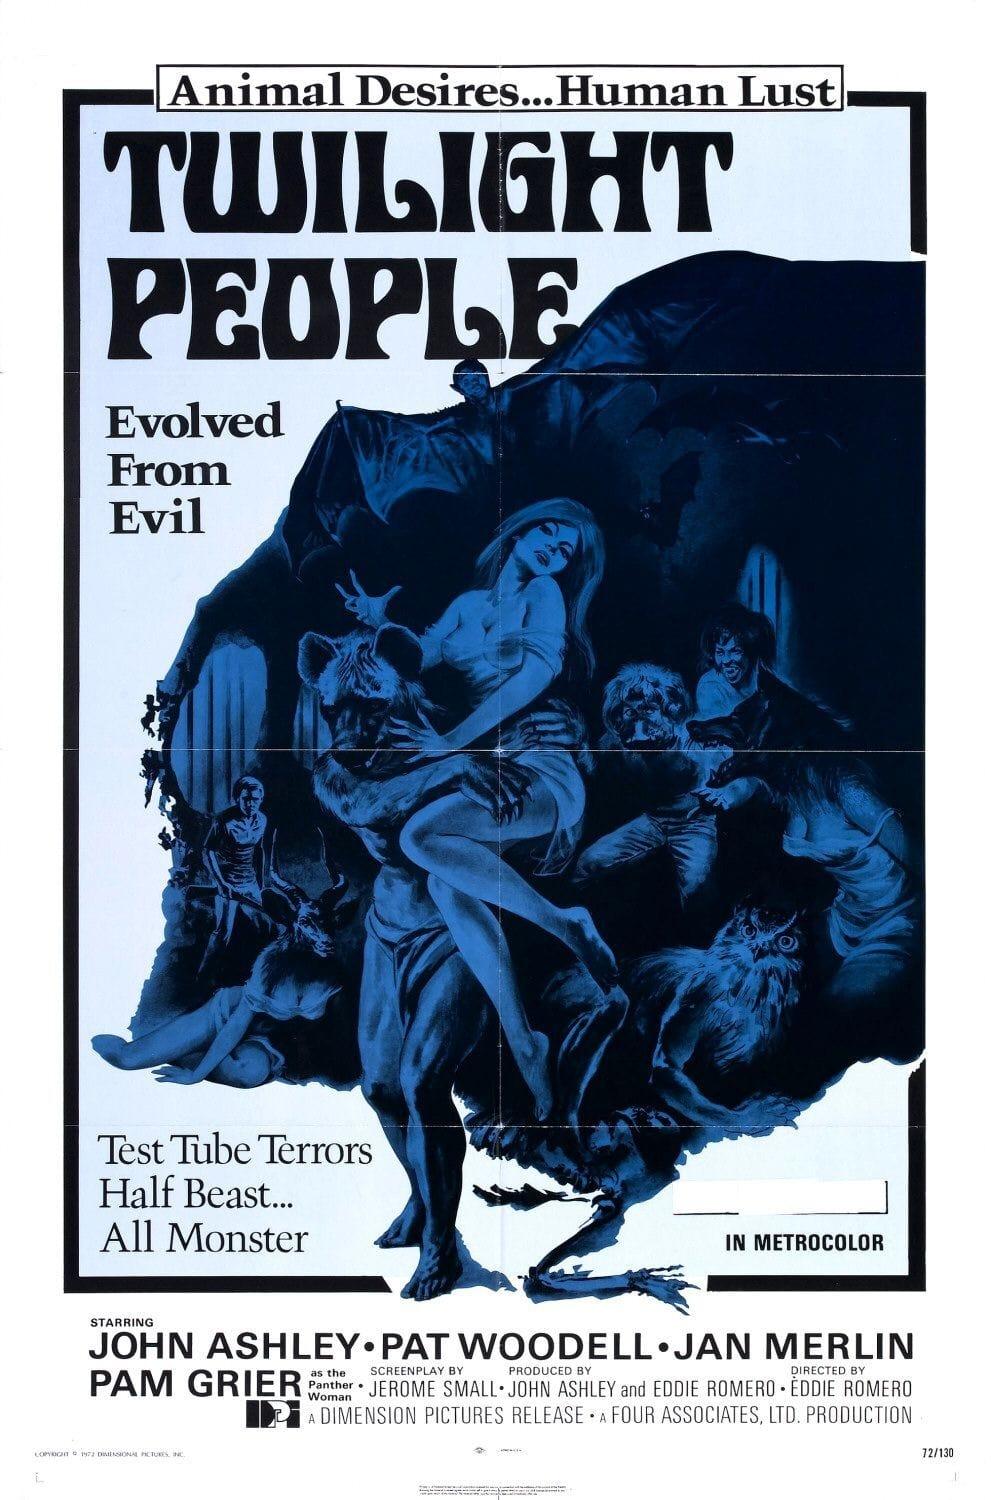 Twilight People poster